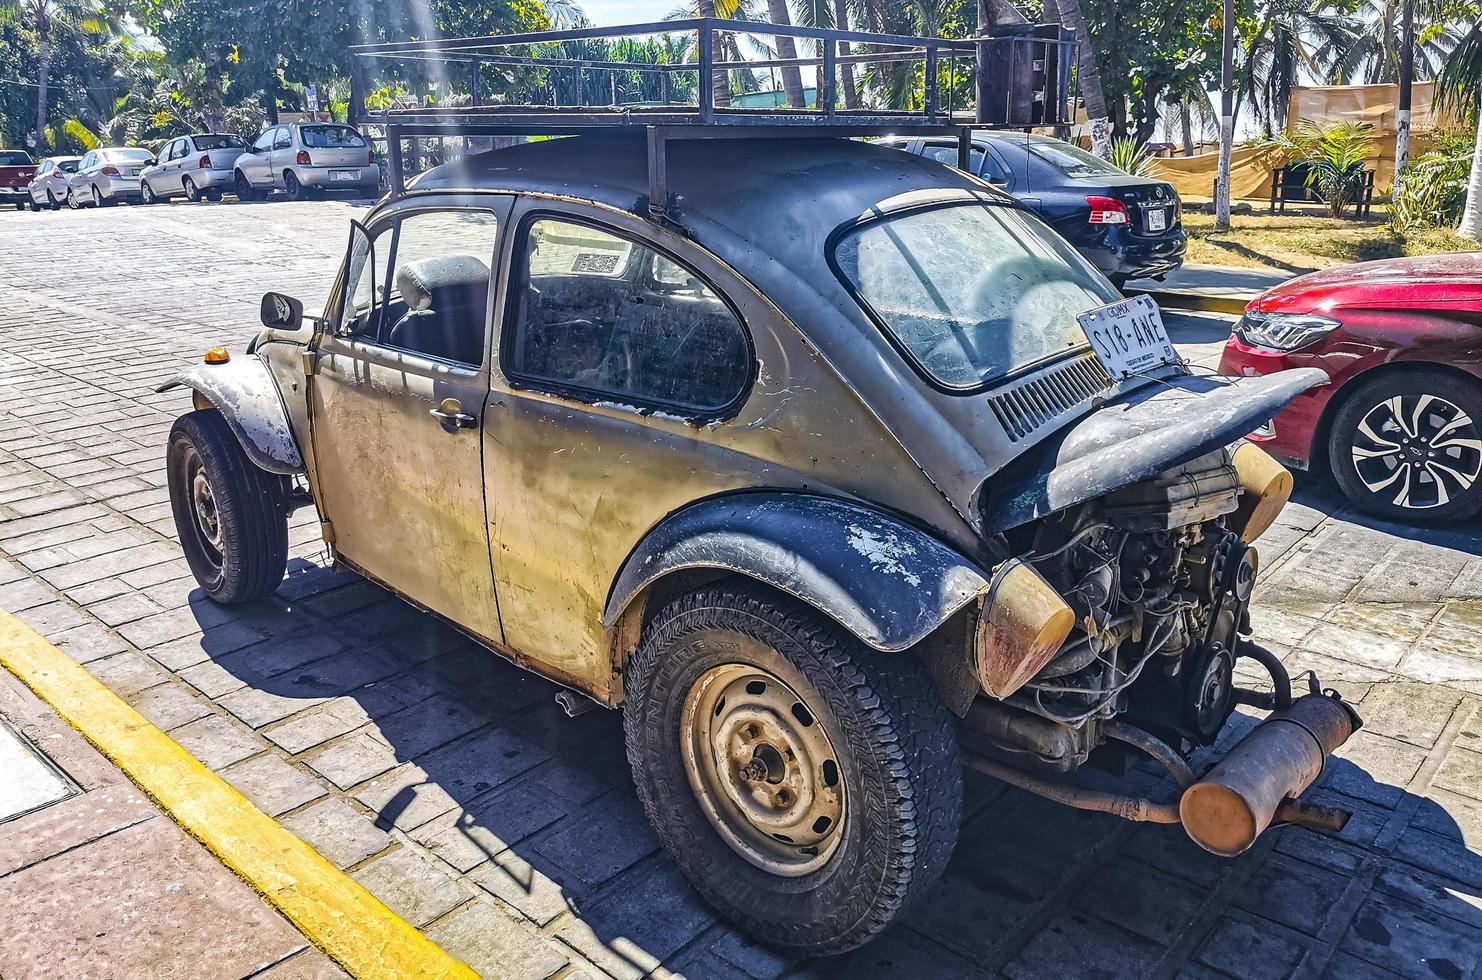 Puerto Escondido Oaxaca Mexico 2022 Old broken rusty and damaged classic vintage cars in Mexico. photo